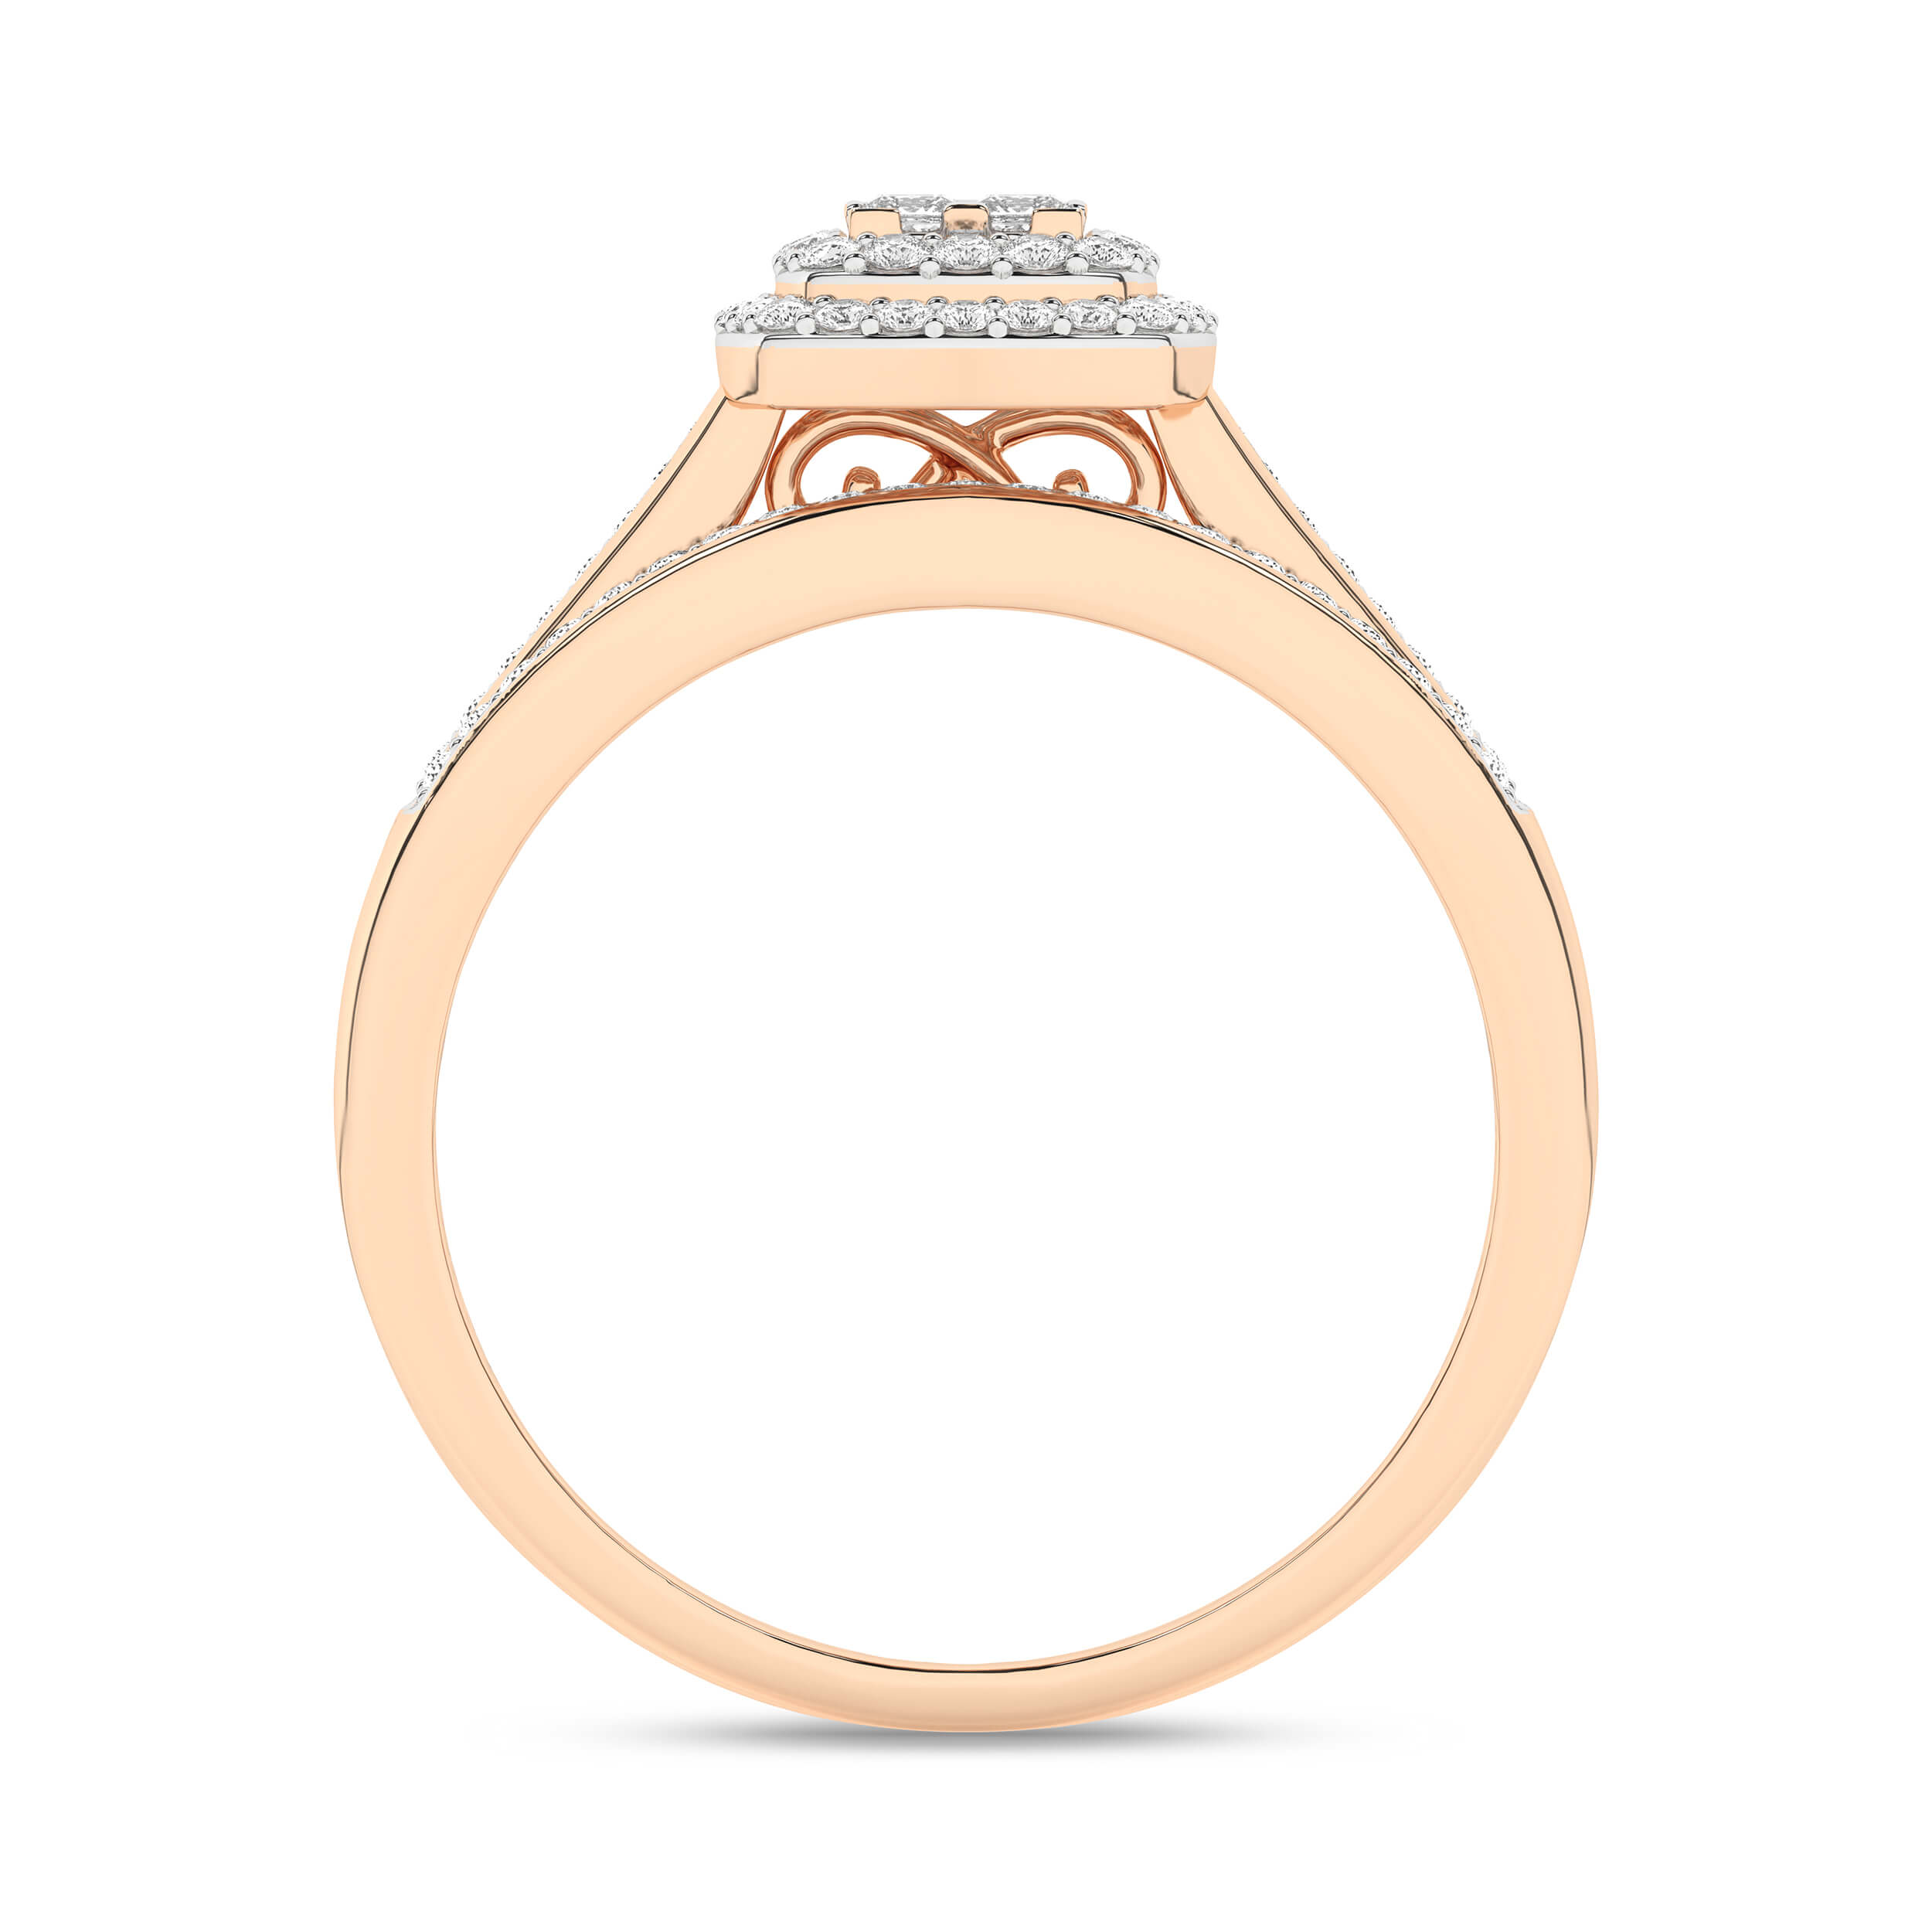 Inel de logodna din Aur Roz 14K cu Diamante 0.25Ct, articol RB13607, previzualizare foto 2